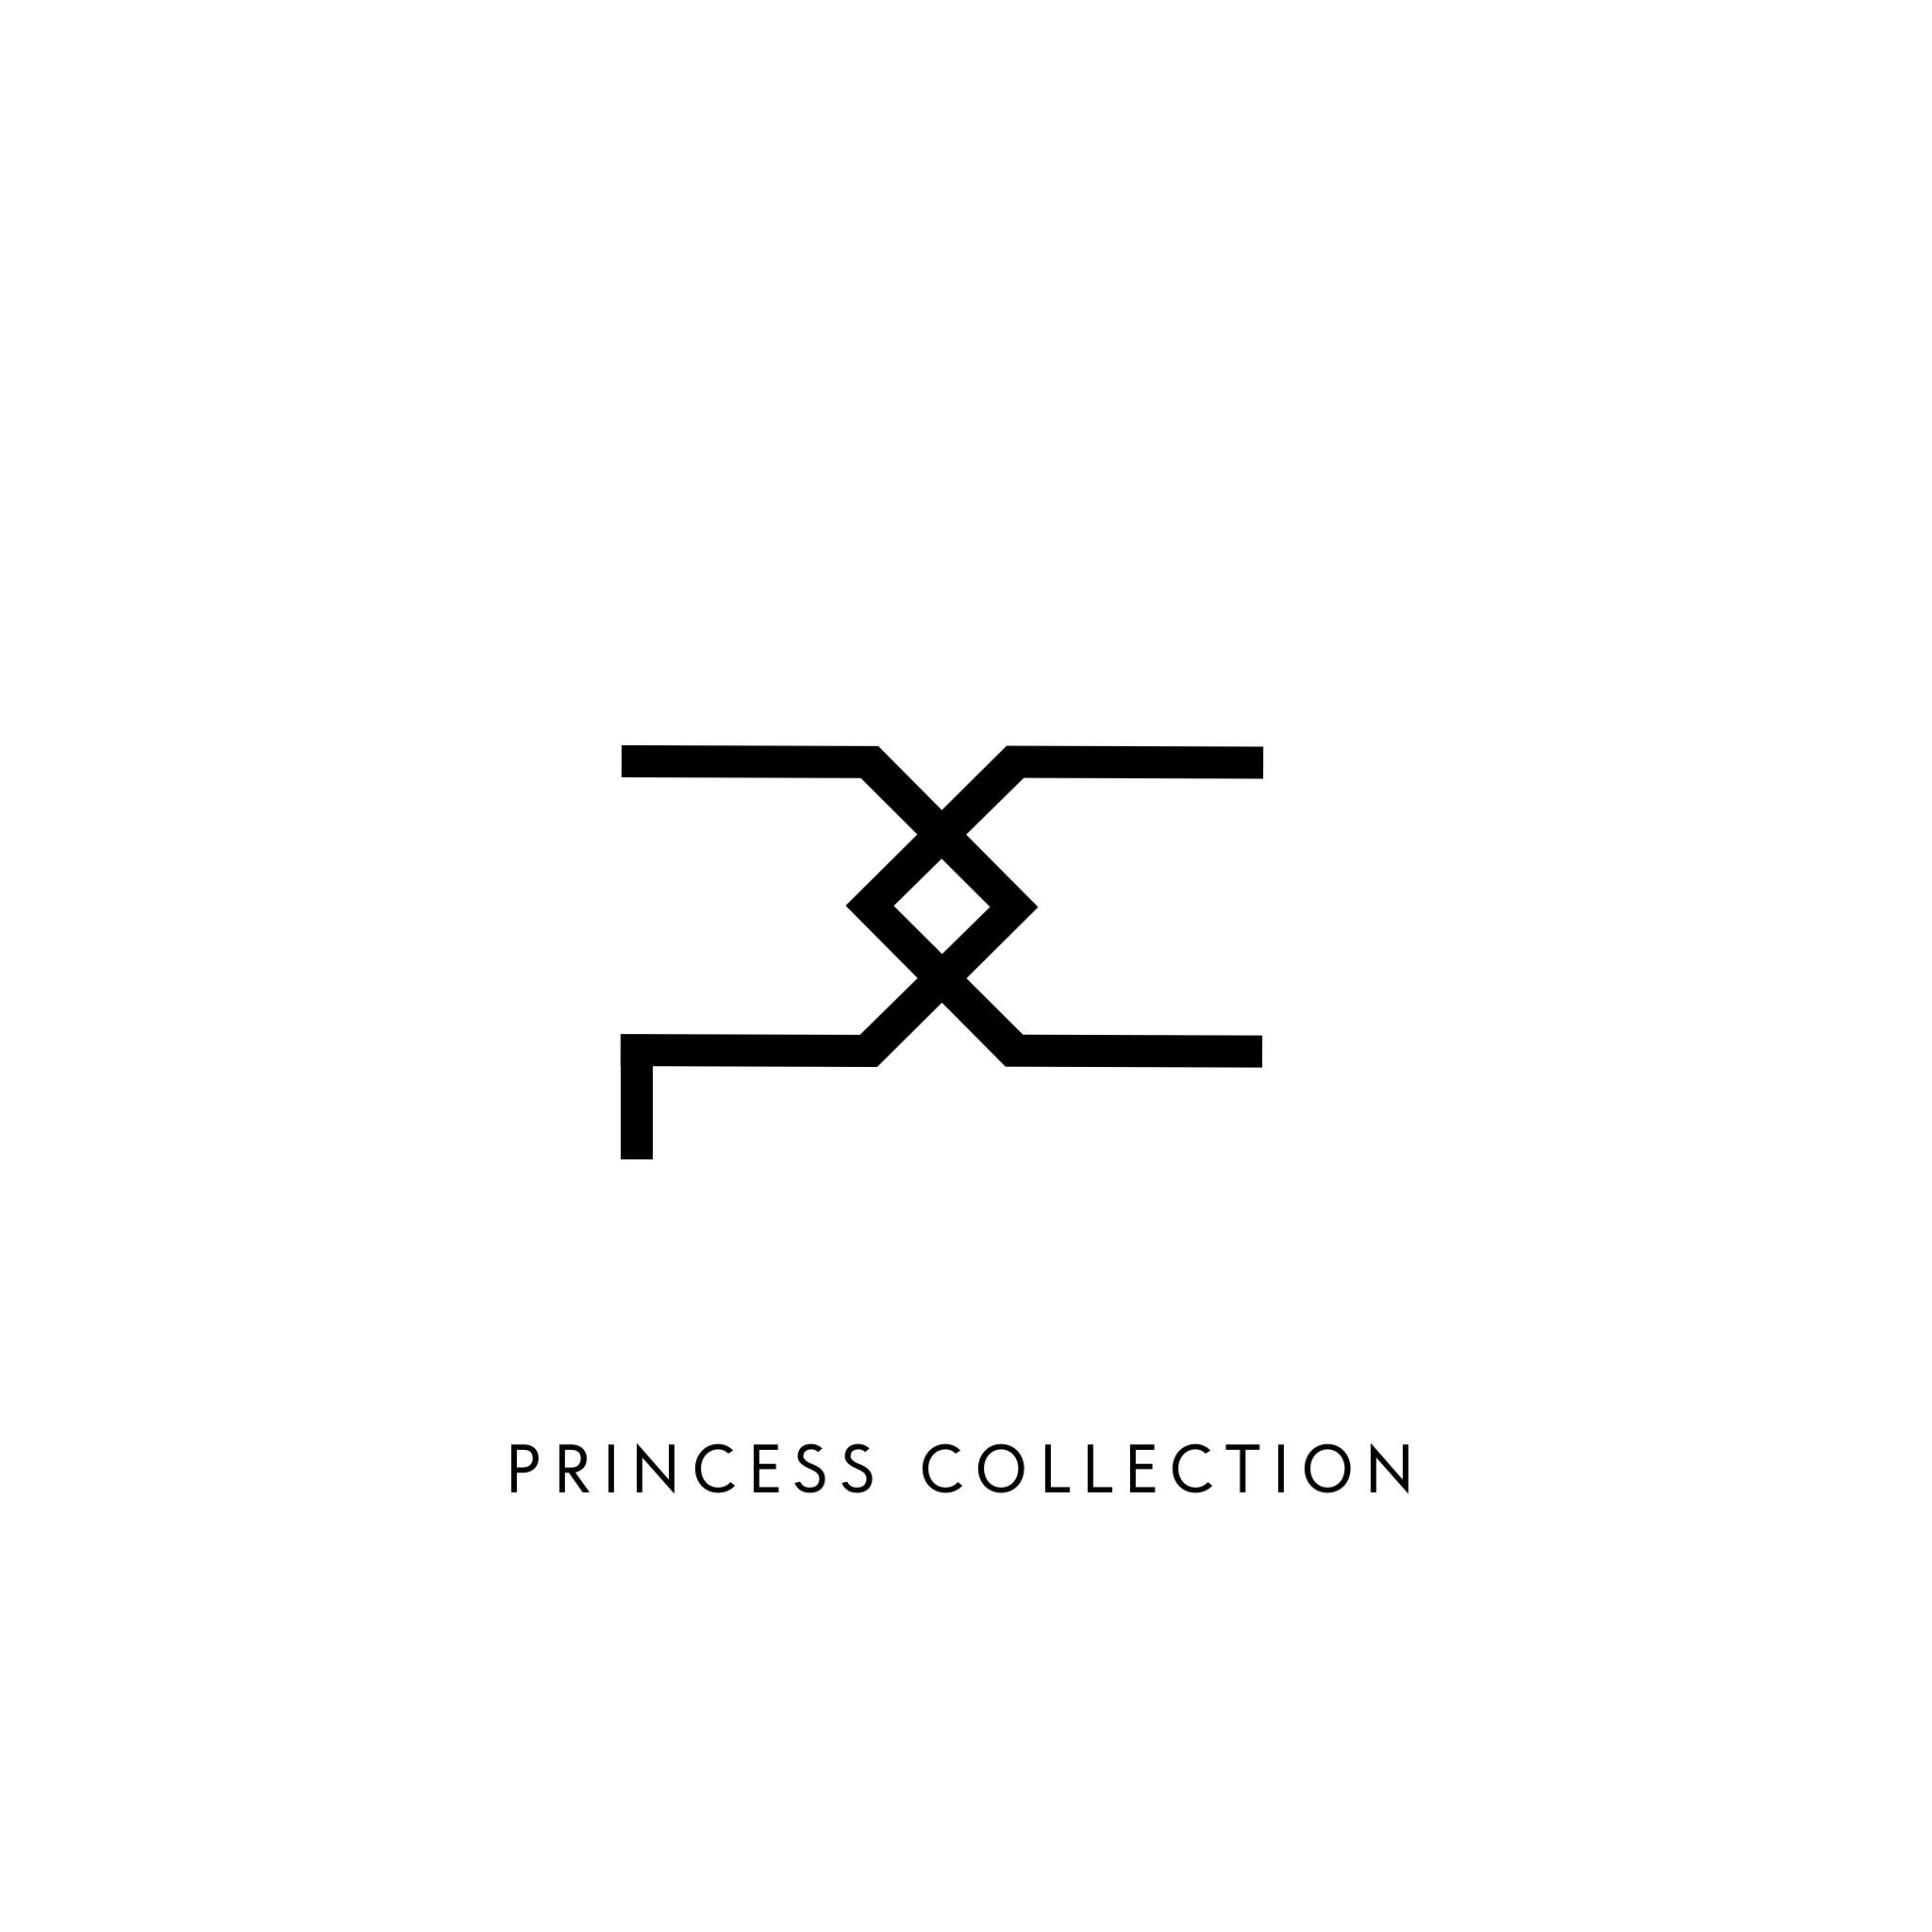 Princess collection